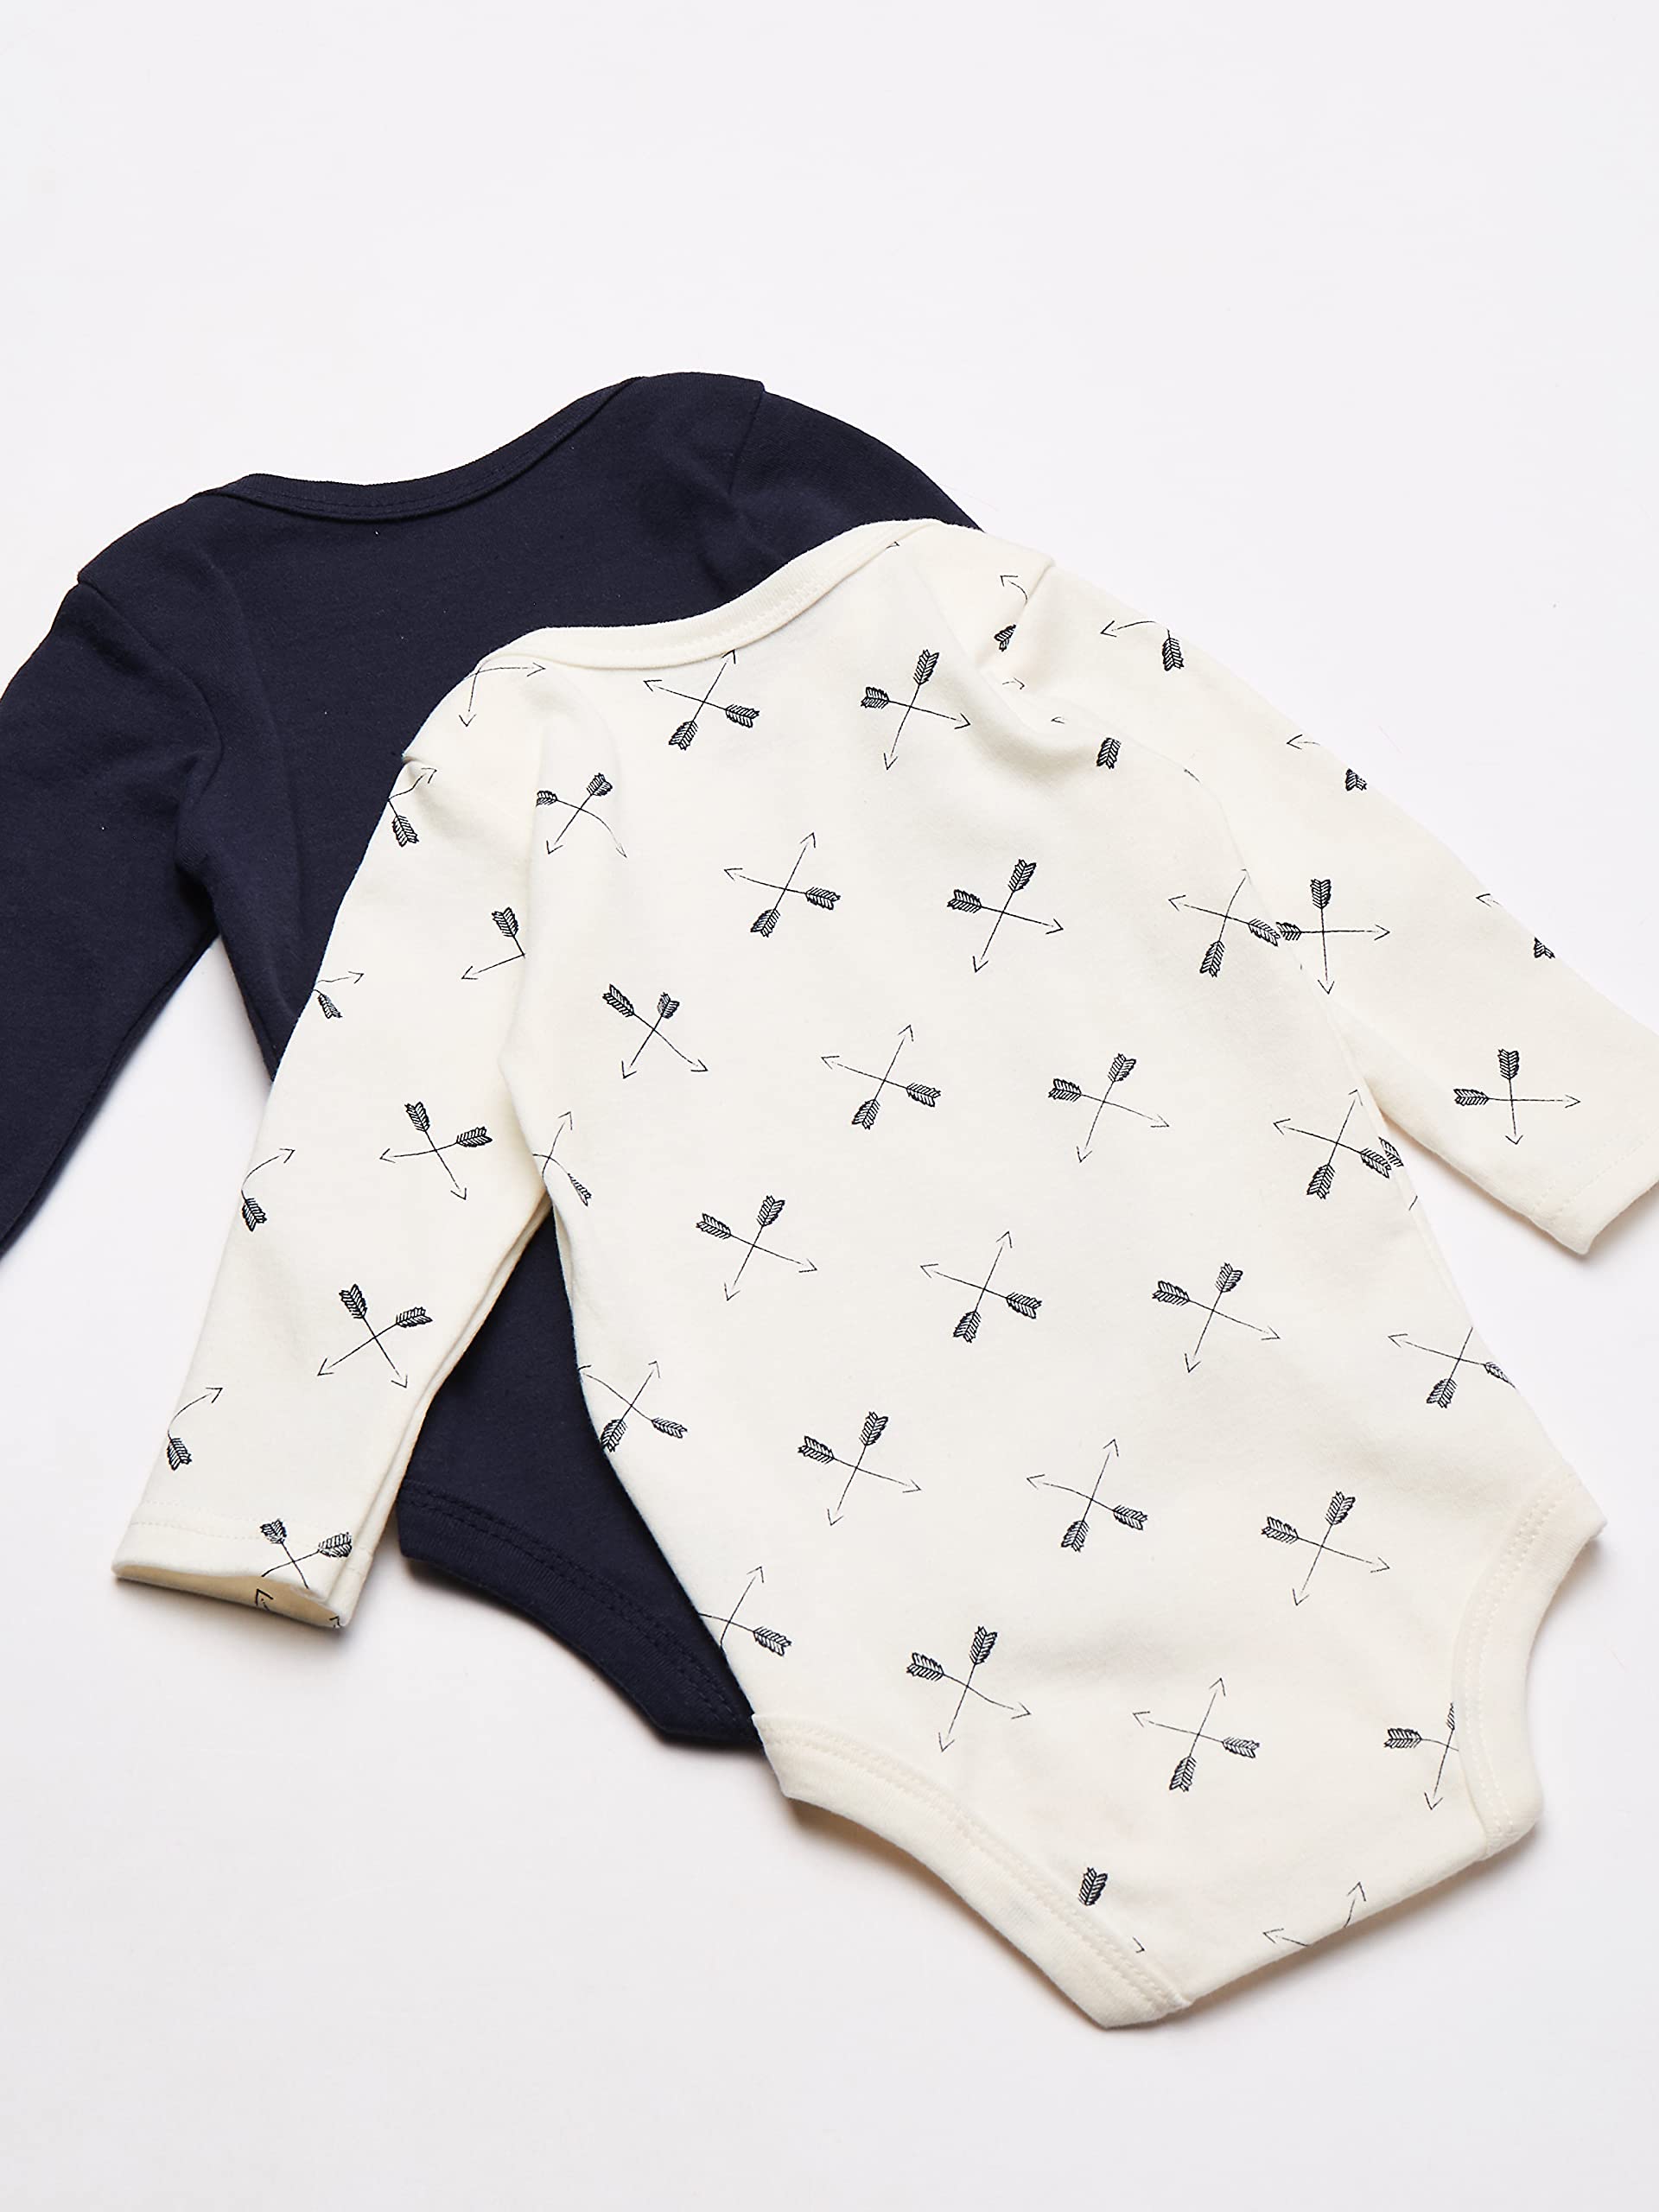 Hudson Baby Unisex Baby Cotton Long-Sleeve Bodysuits